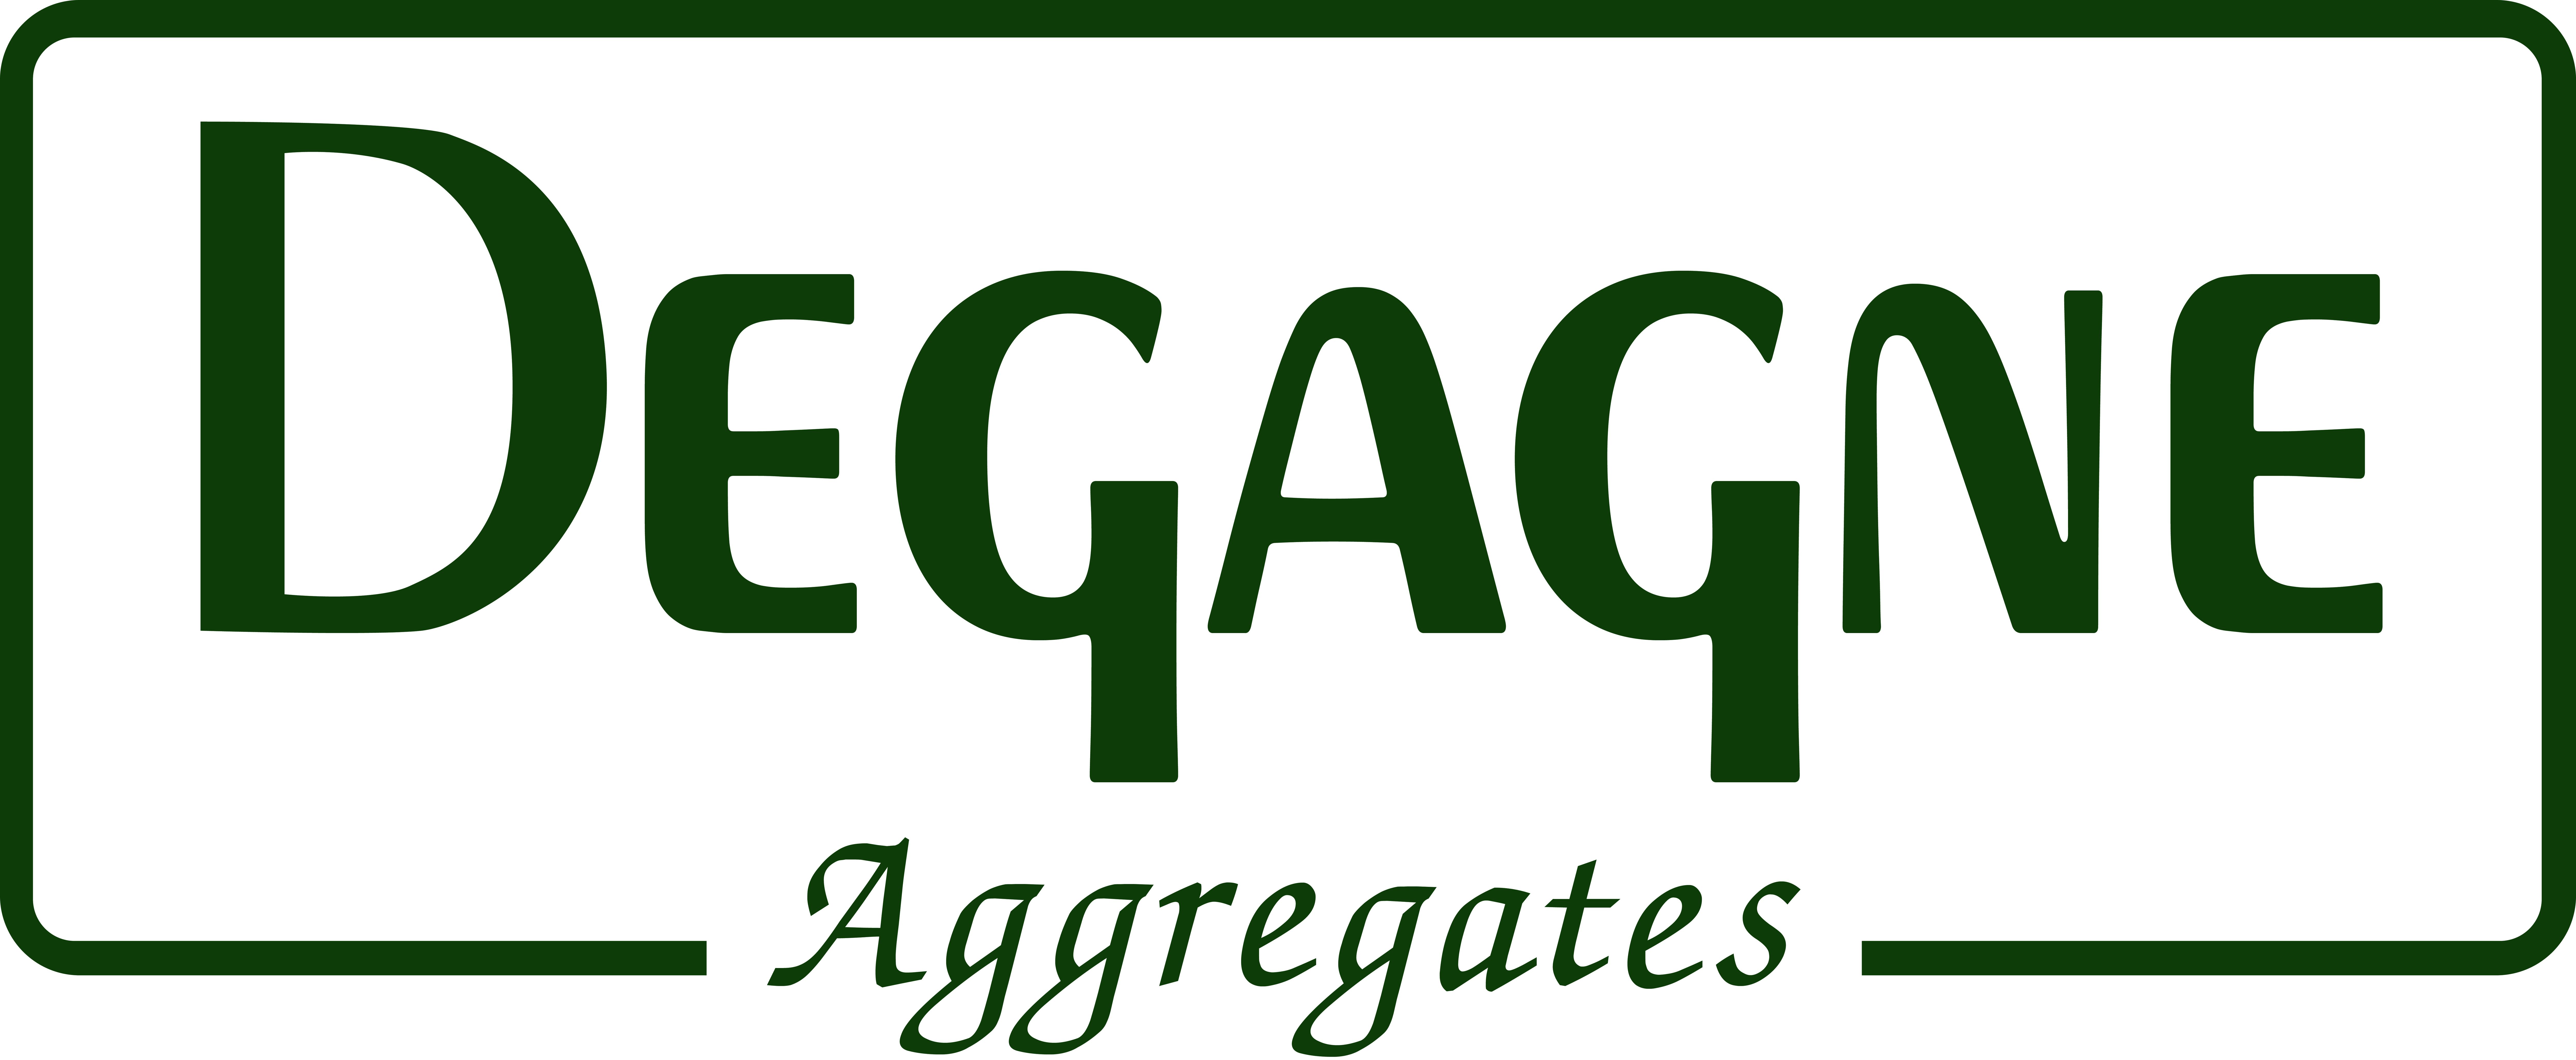 Degagne Aggregates Logo